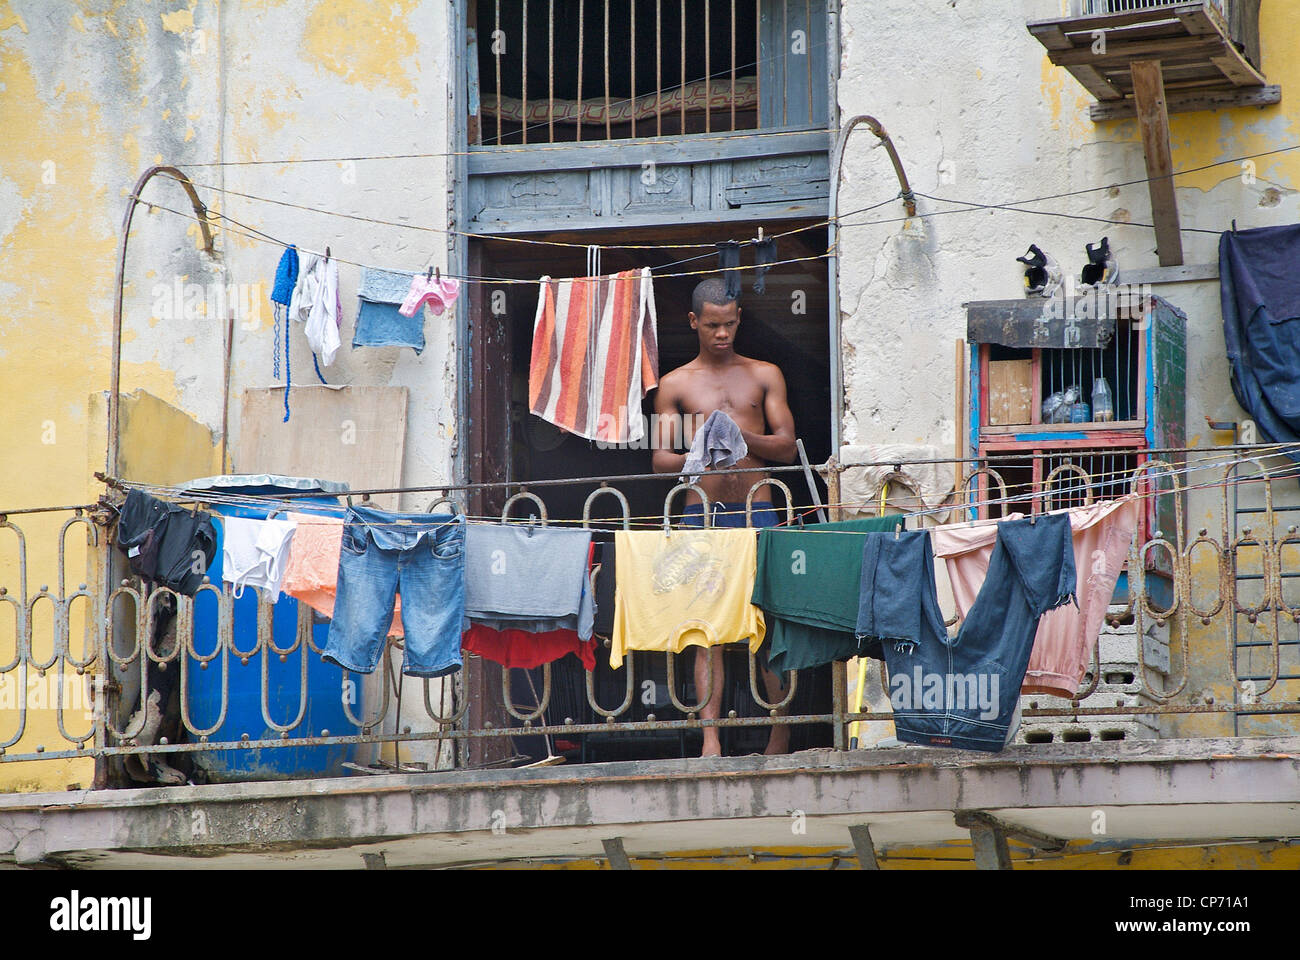 A man hanging out laundry on a balcony, Havana, Cuba Stock Photo